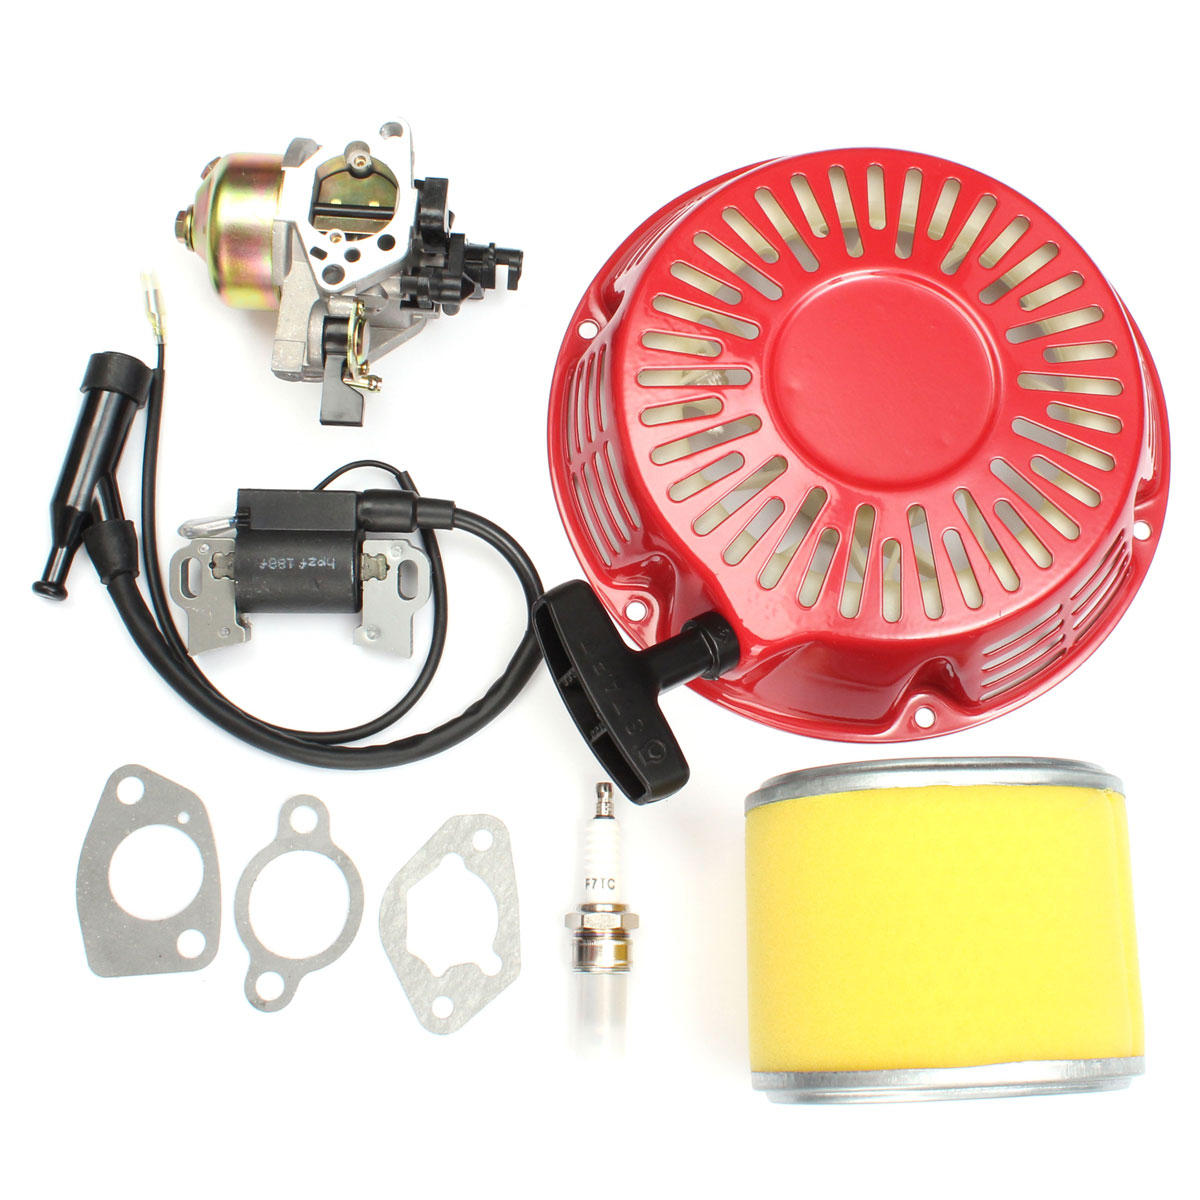 Image of Carburetor Recoil Filter Ignition Coil Plug Kit For Honda GX340 11HP GX390 13HP